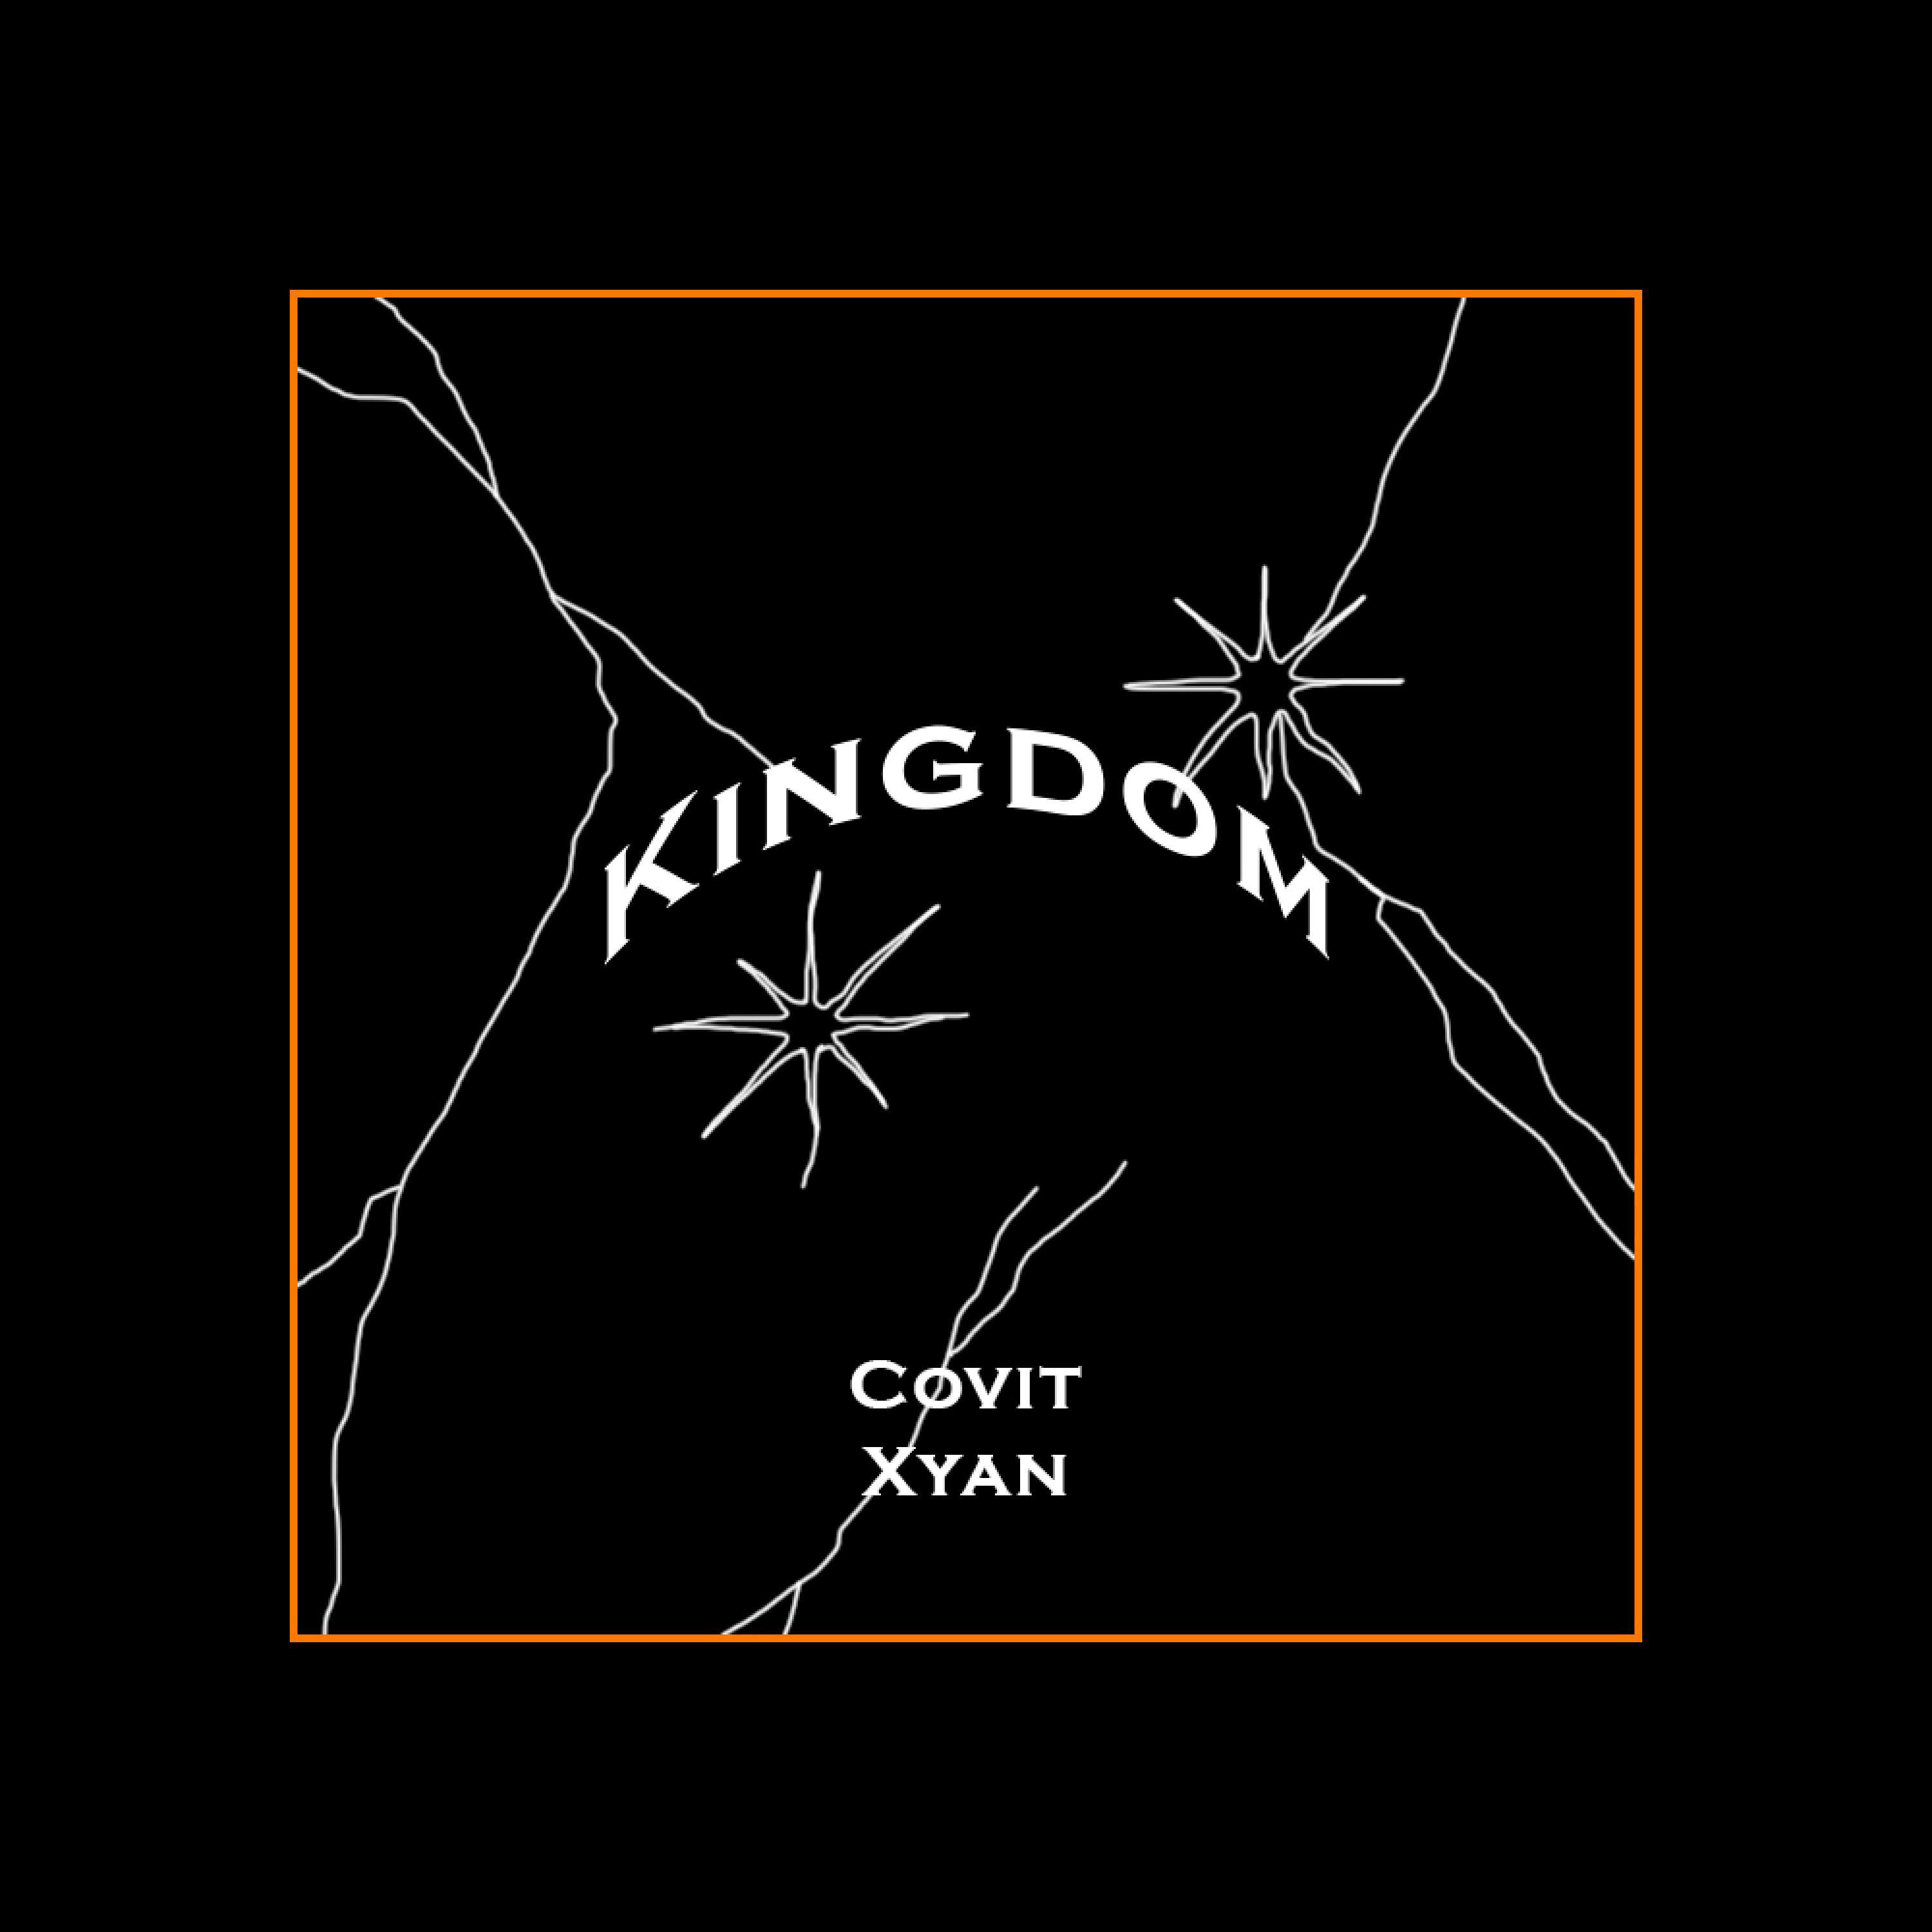 Covit - Kingdom (feat. Xyan)